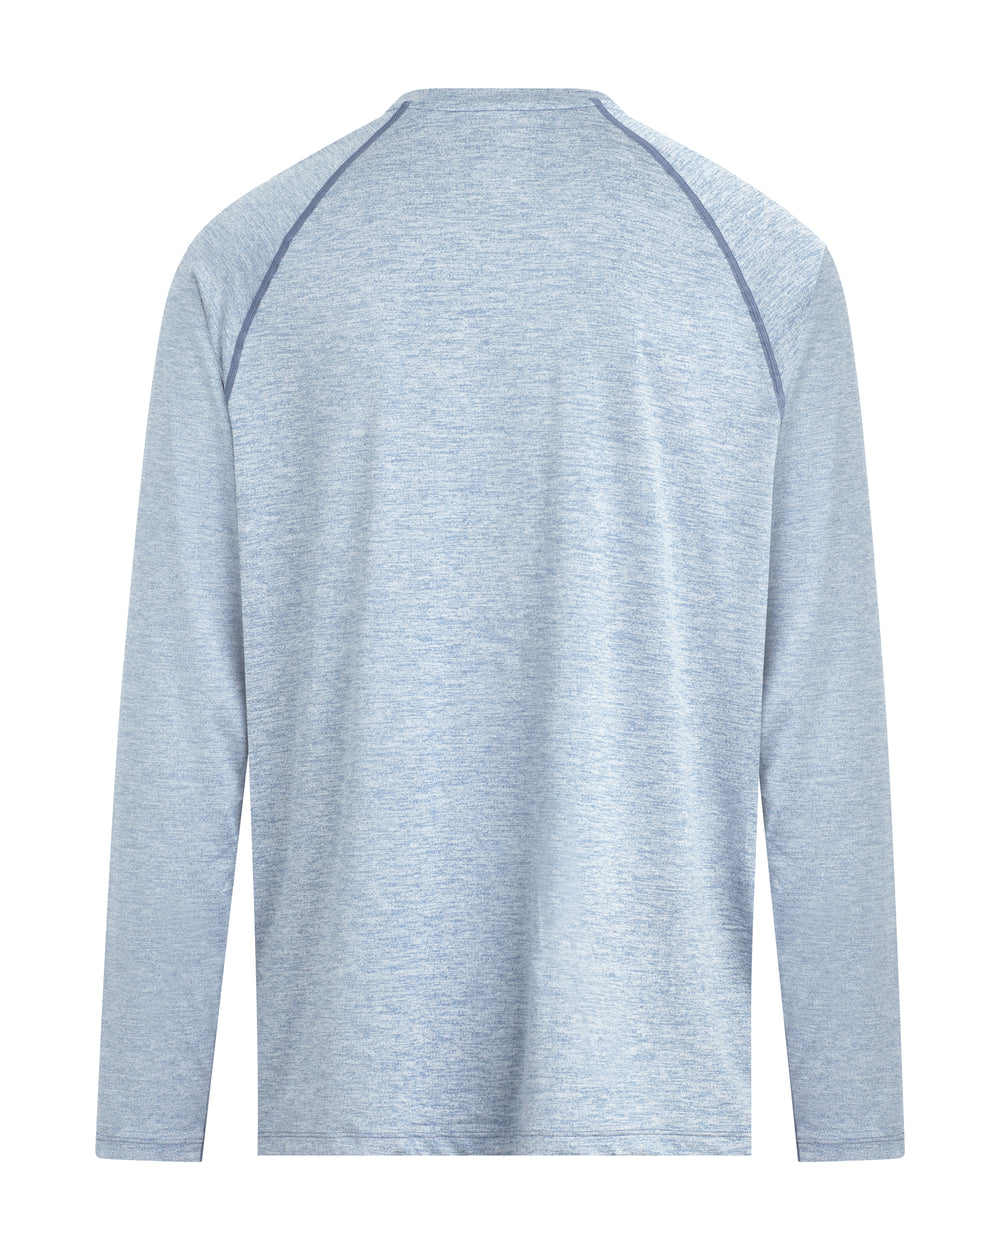 Long-Sleeved Raglan UPF 50+ Blue T-Shirt | Body Glove